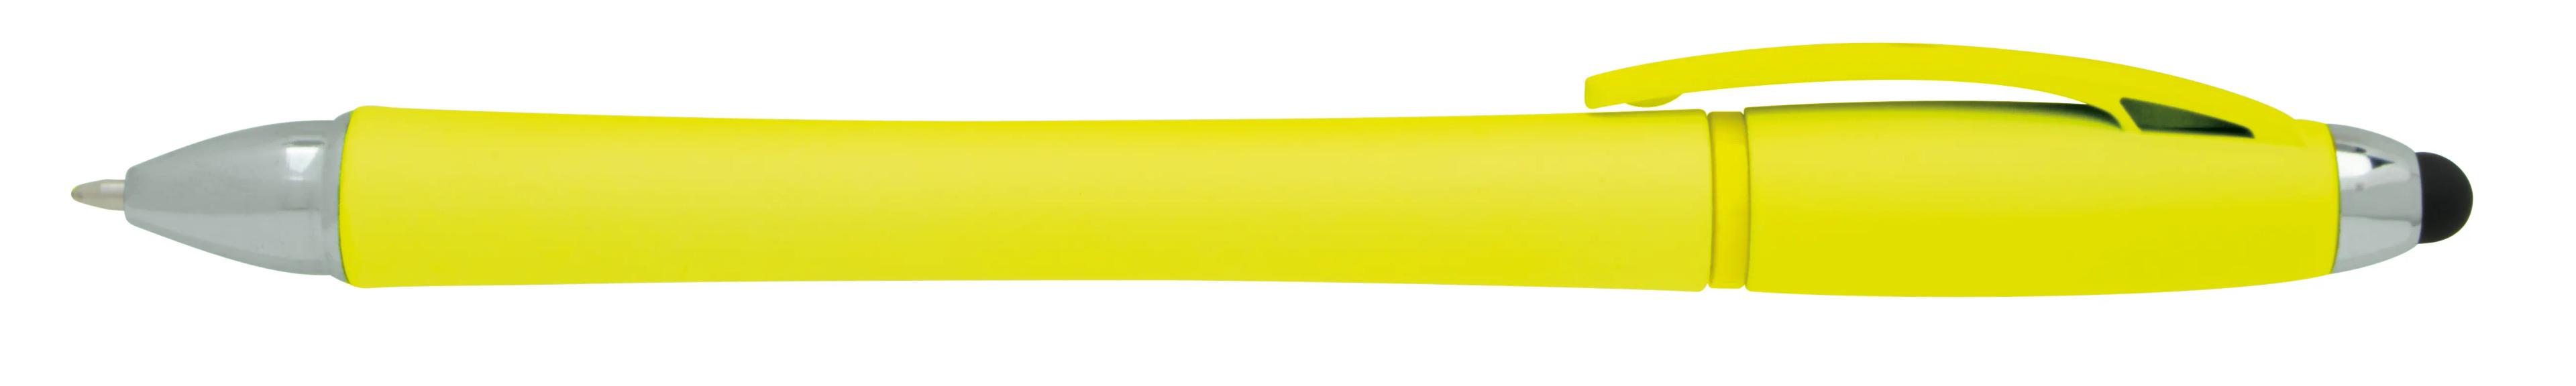 Neon Stylus Highlighter-Pen Combo 4 of 16